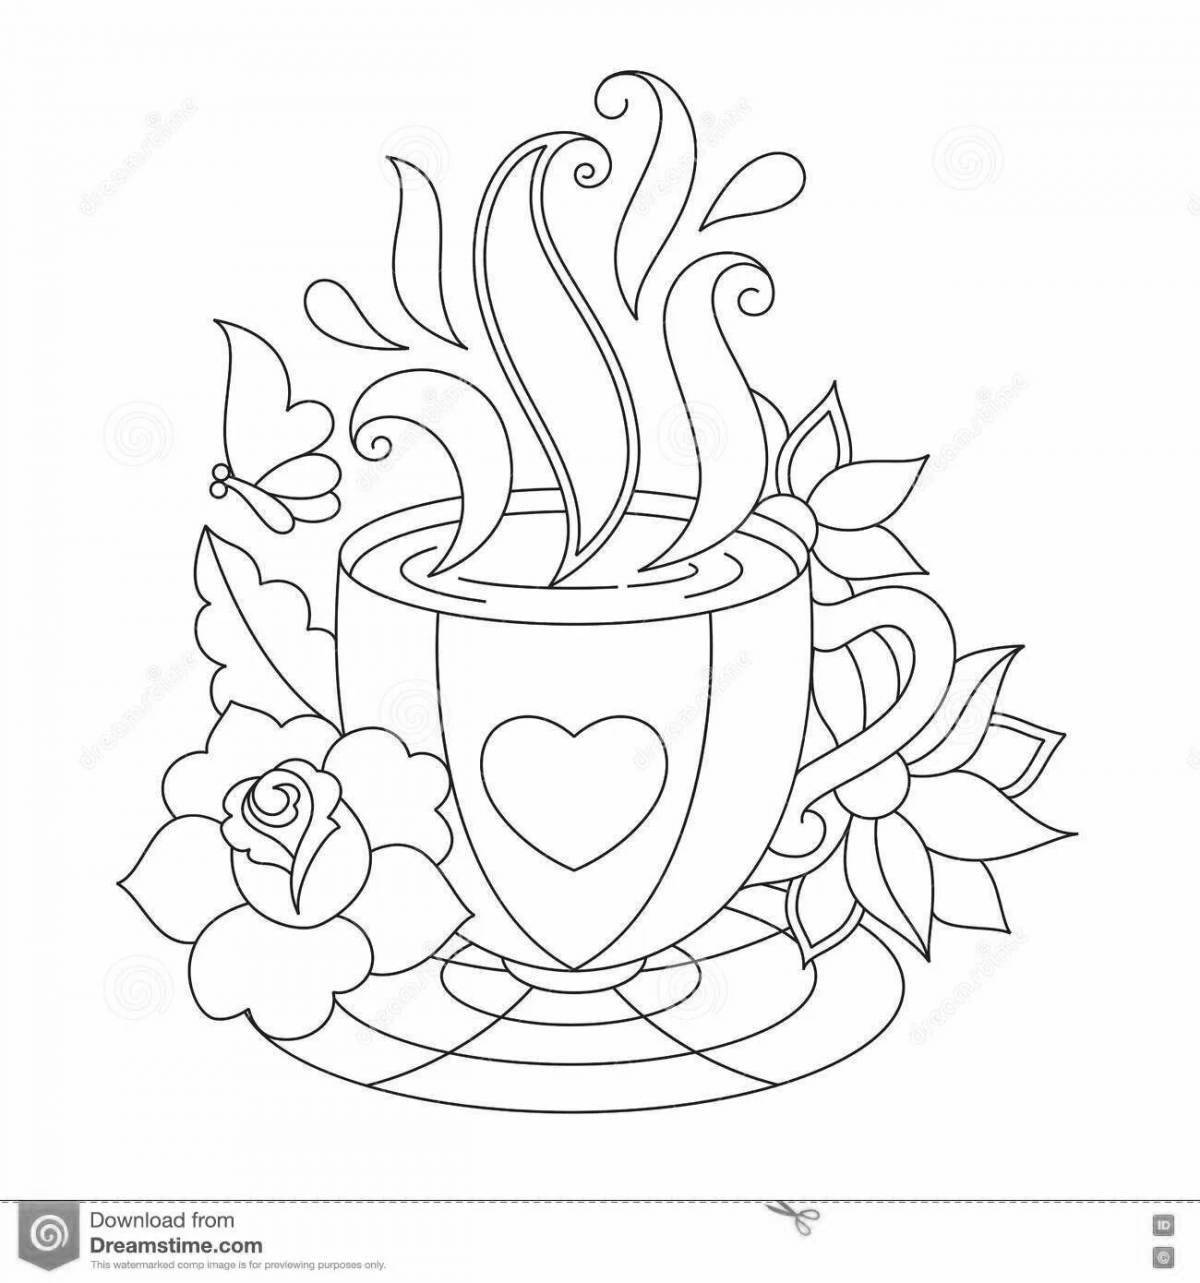 Joyful cup of tea coloring book